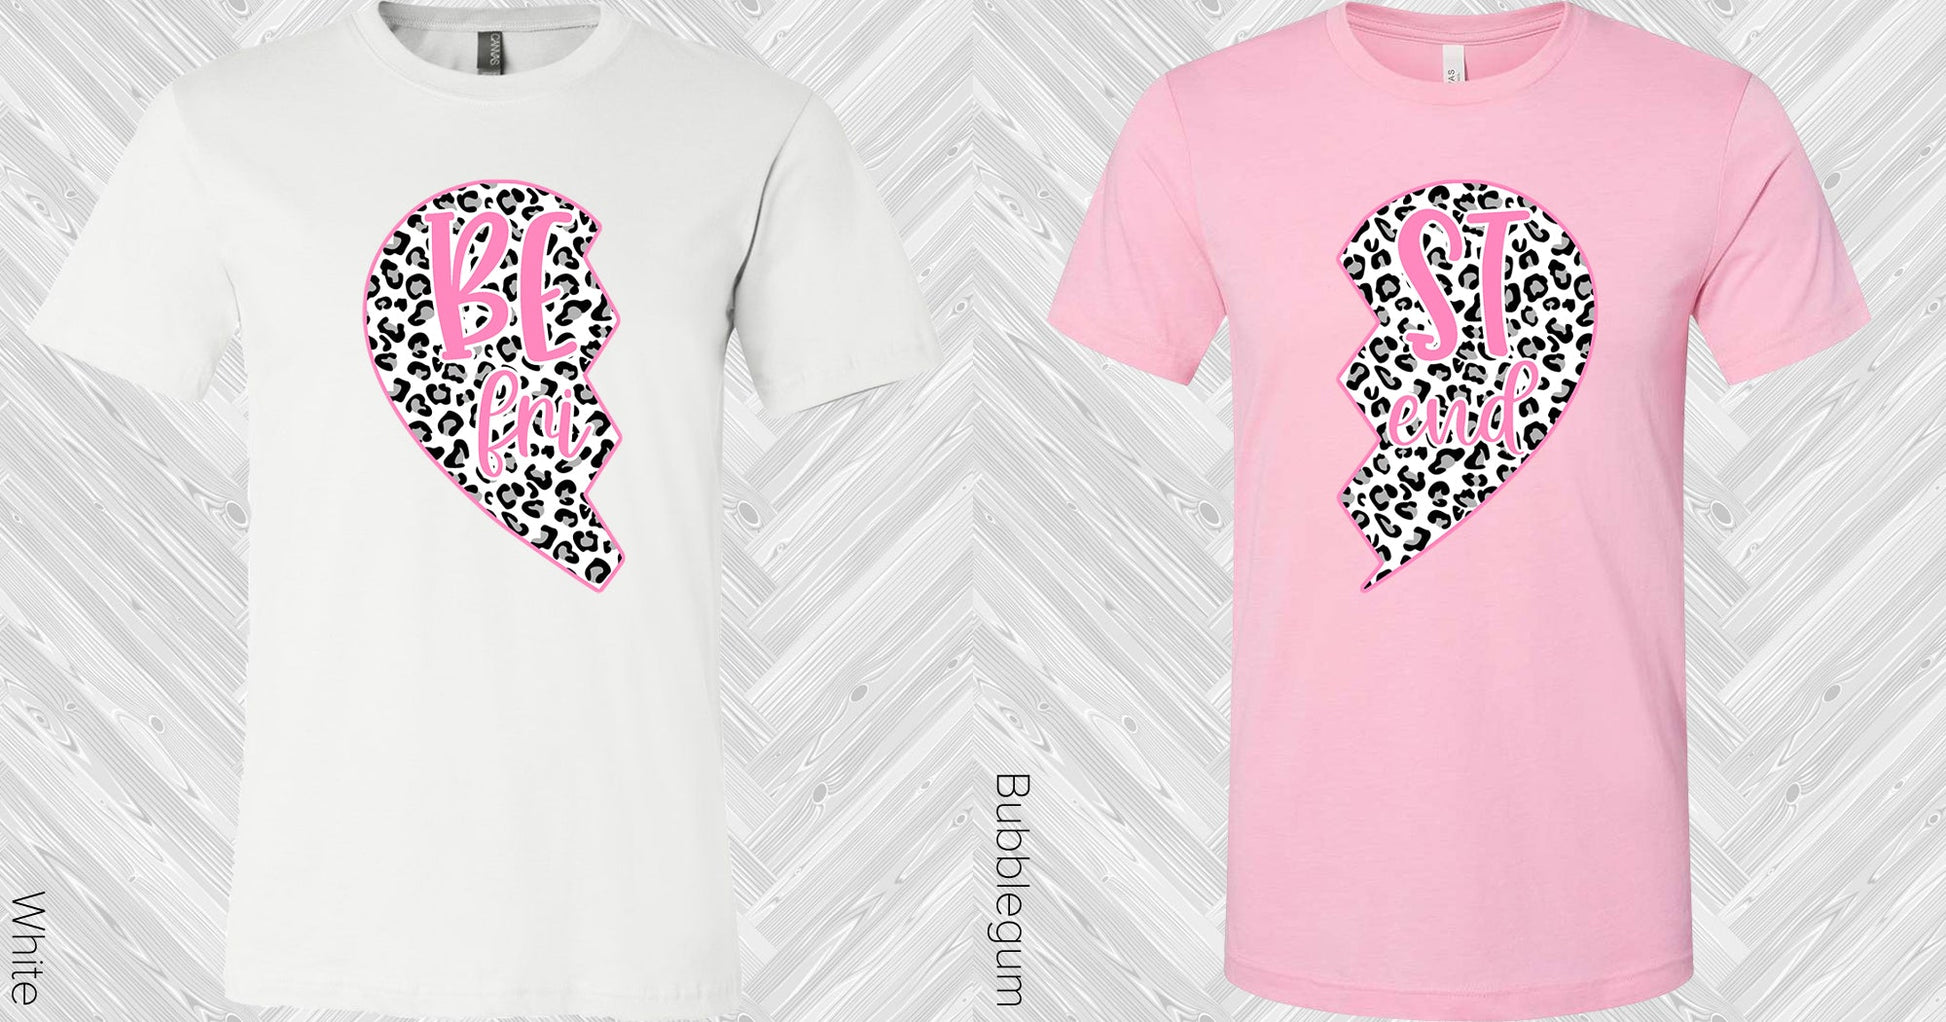 Leopard Heart Best Friend (Left Shirt In Photo) Graphic Tee Graphic Tee